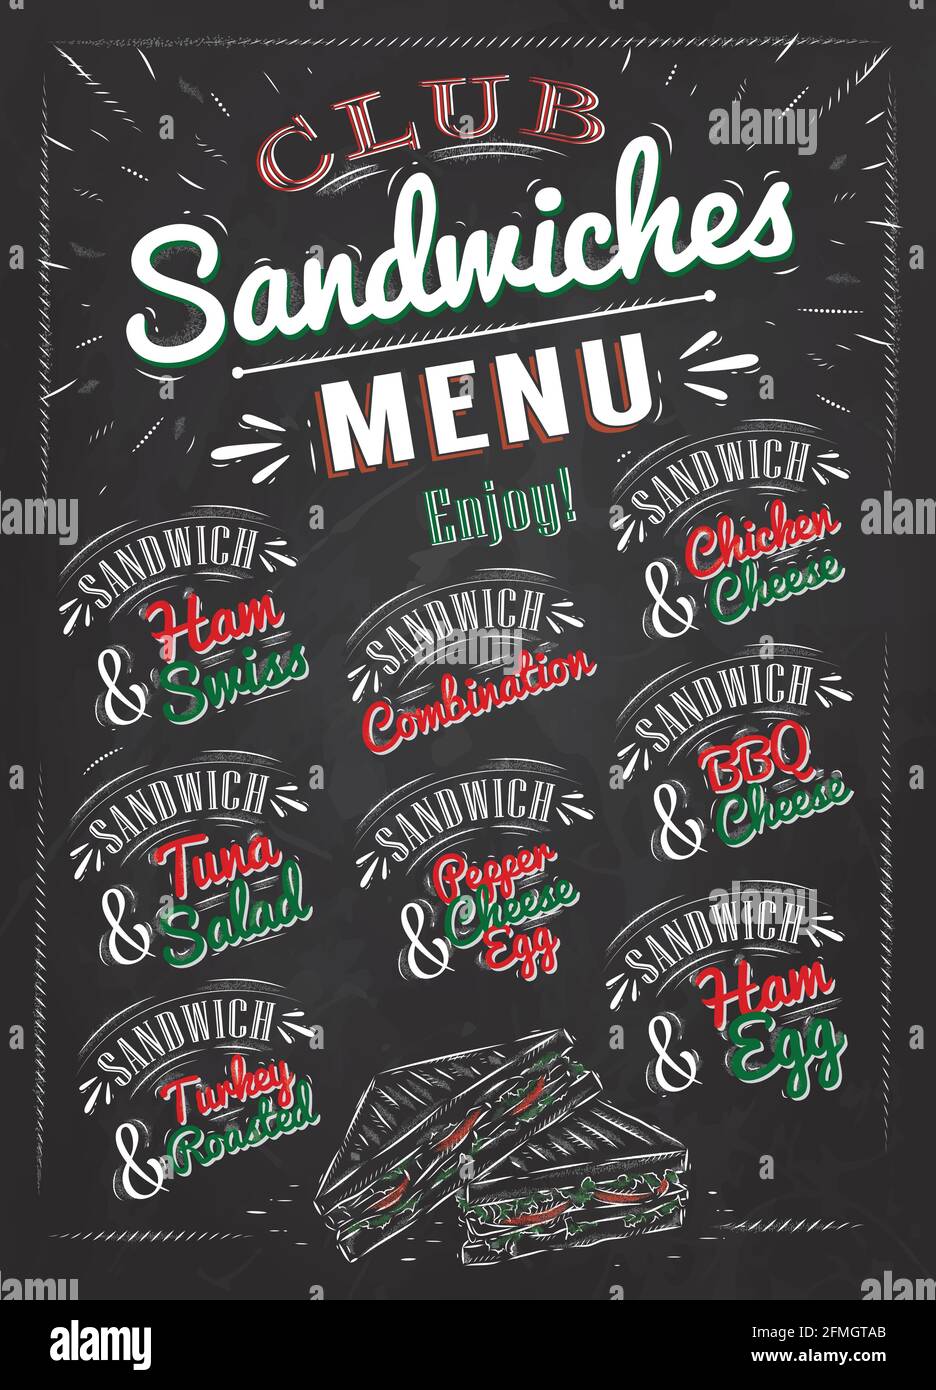 Sandwiches menu the names of sandwiches , ham swiss, chicken cheese, tuna salad, bbq cheese, ham egg, pepper cheese eeg, turkry roasted design a menu Stock Vector